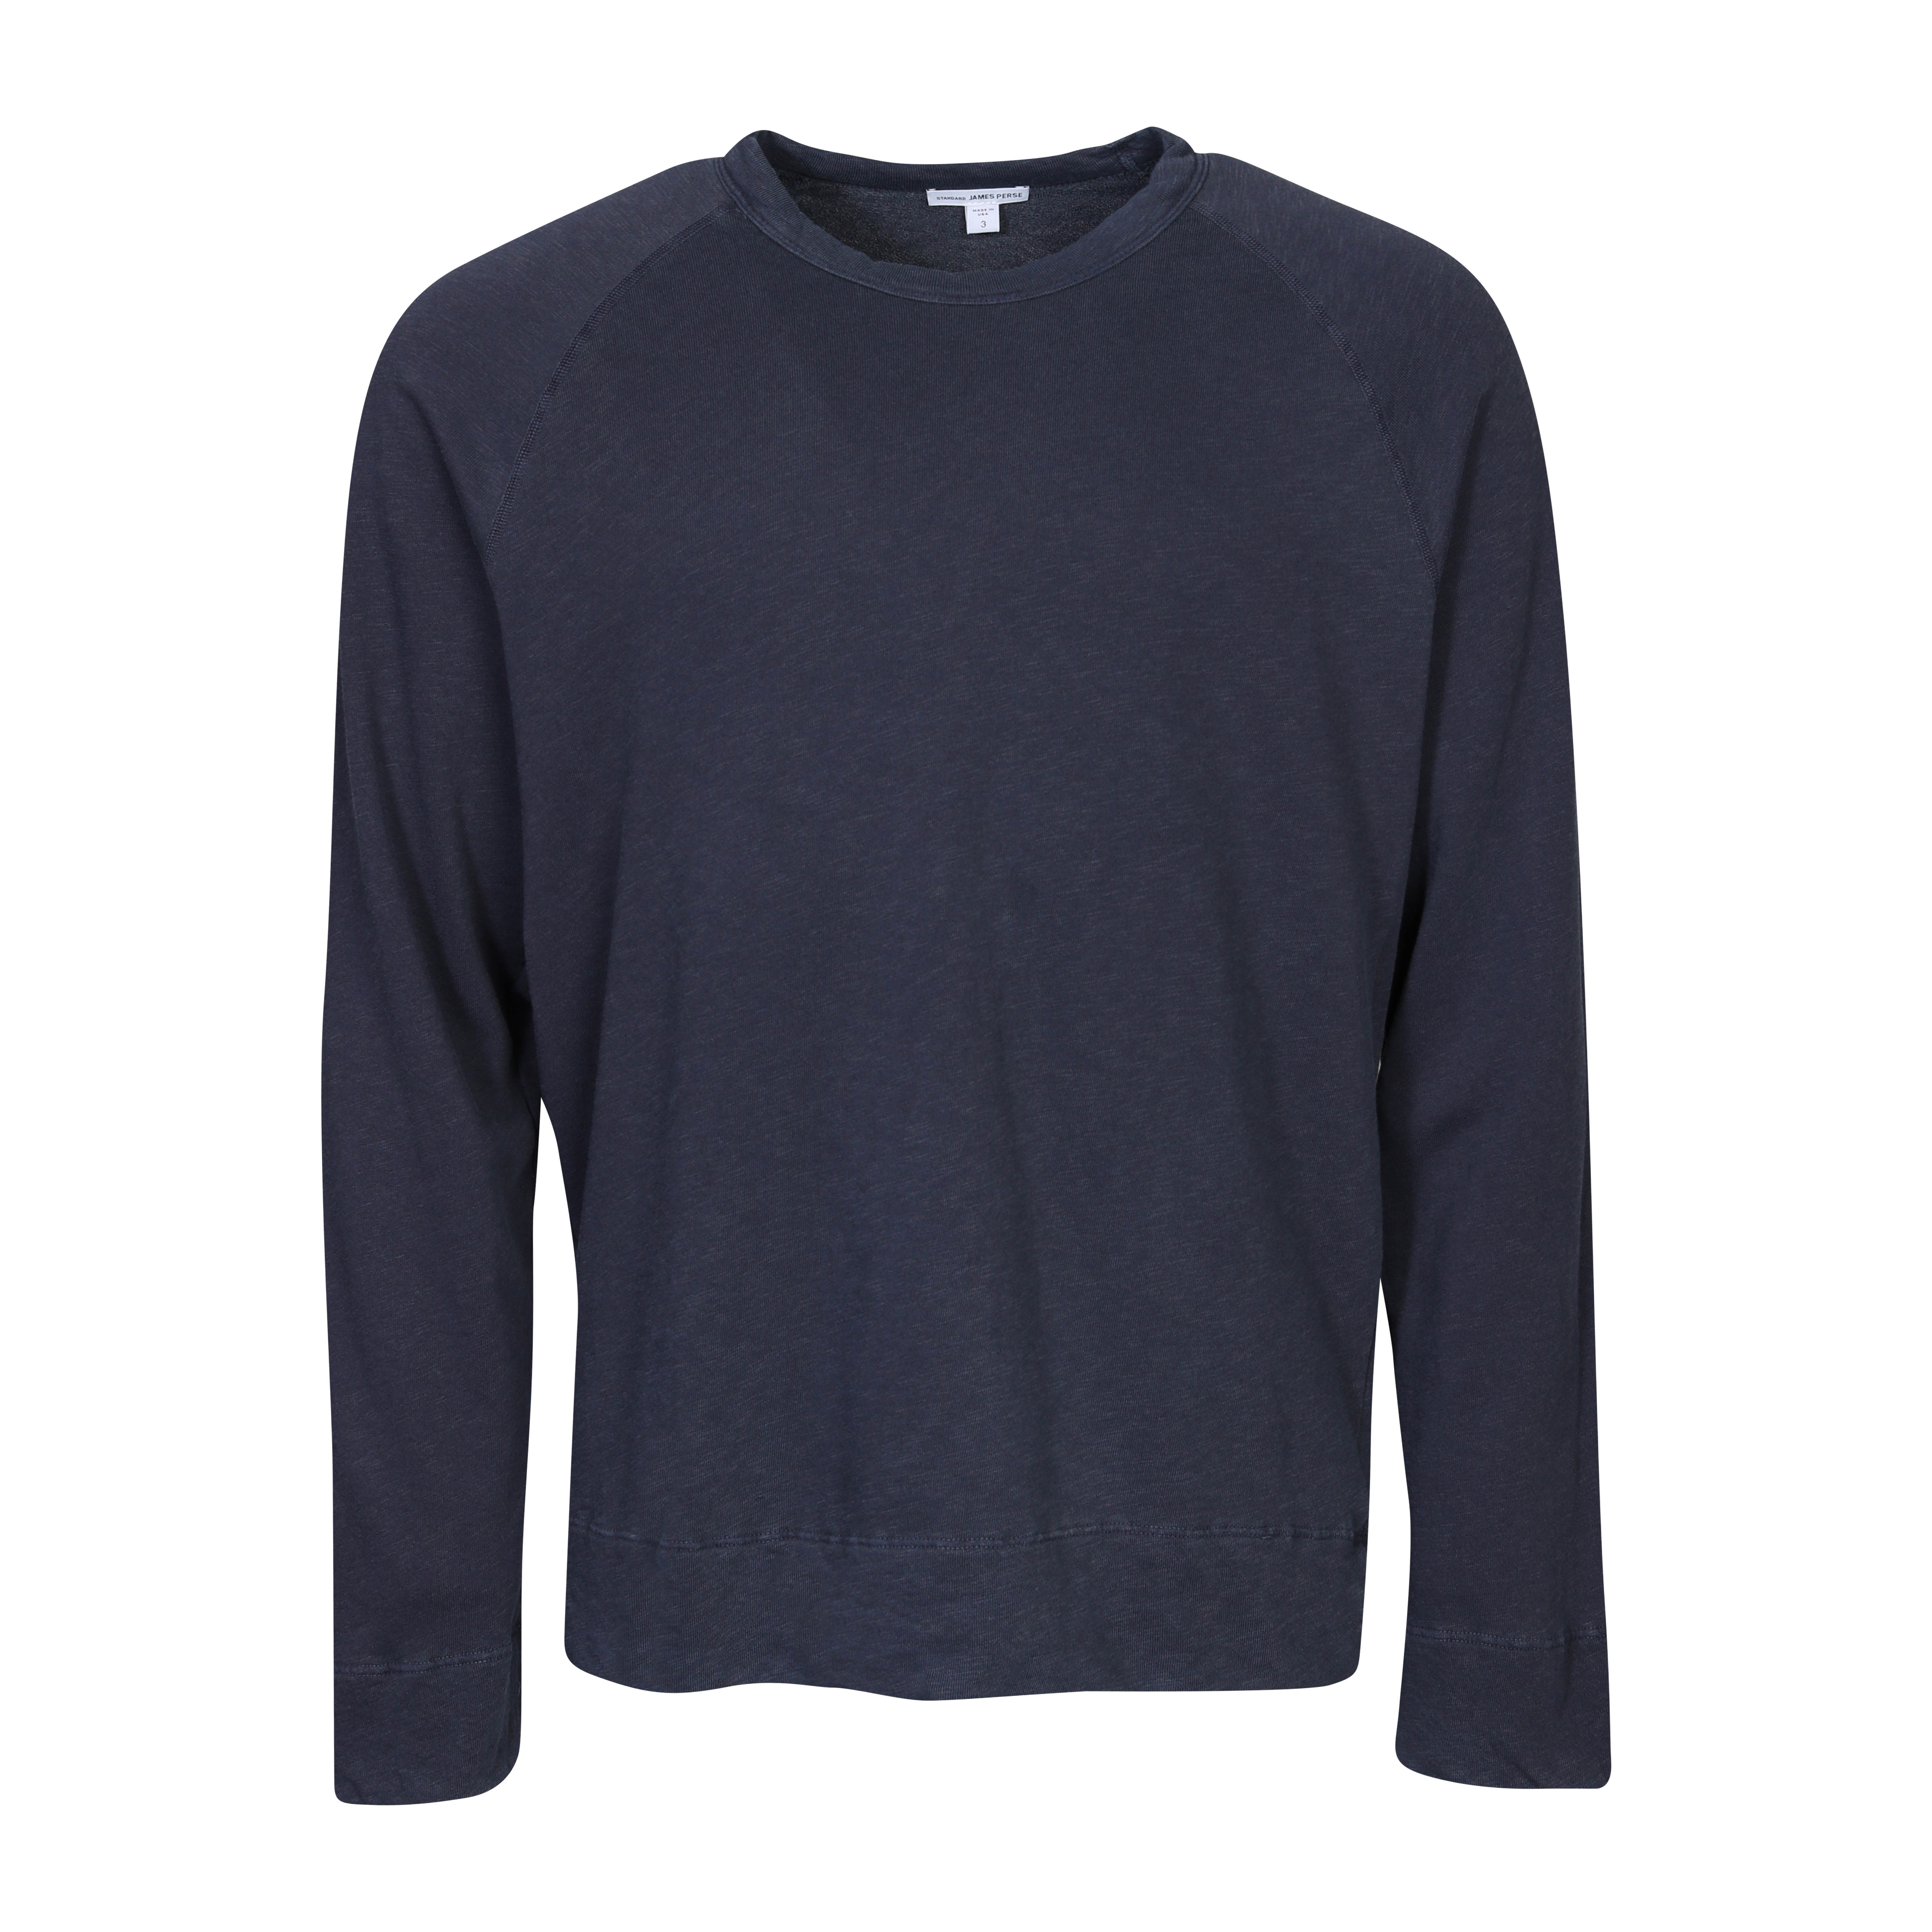 James Perse Vintage Cotton Raglan Sweater in Deep 1/S